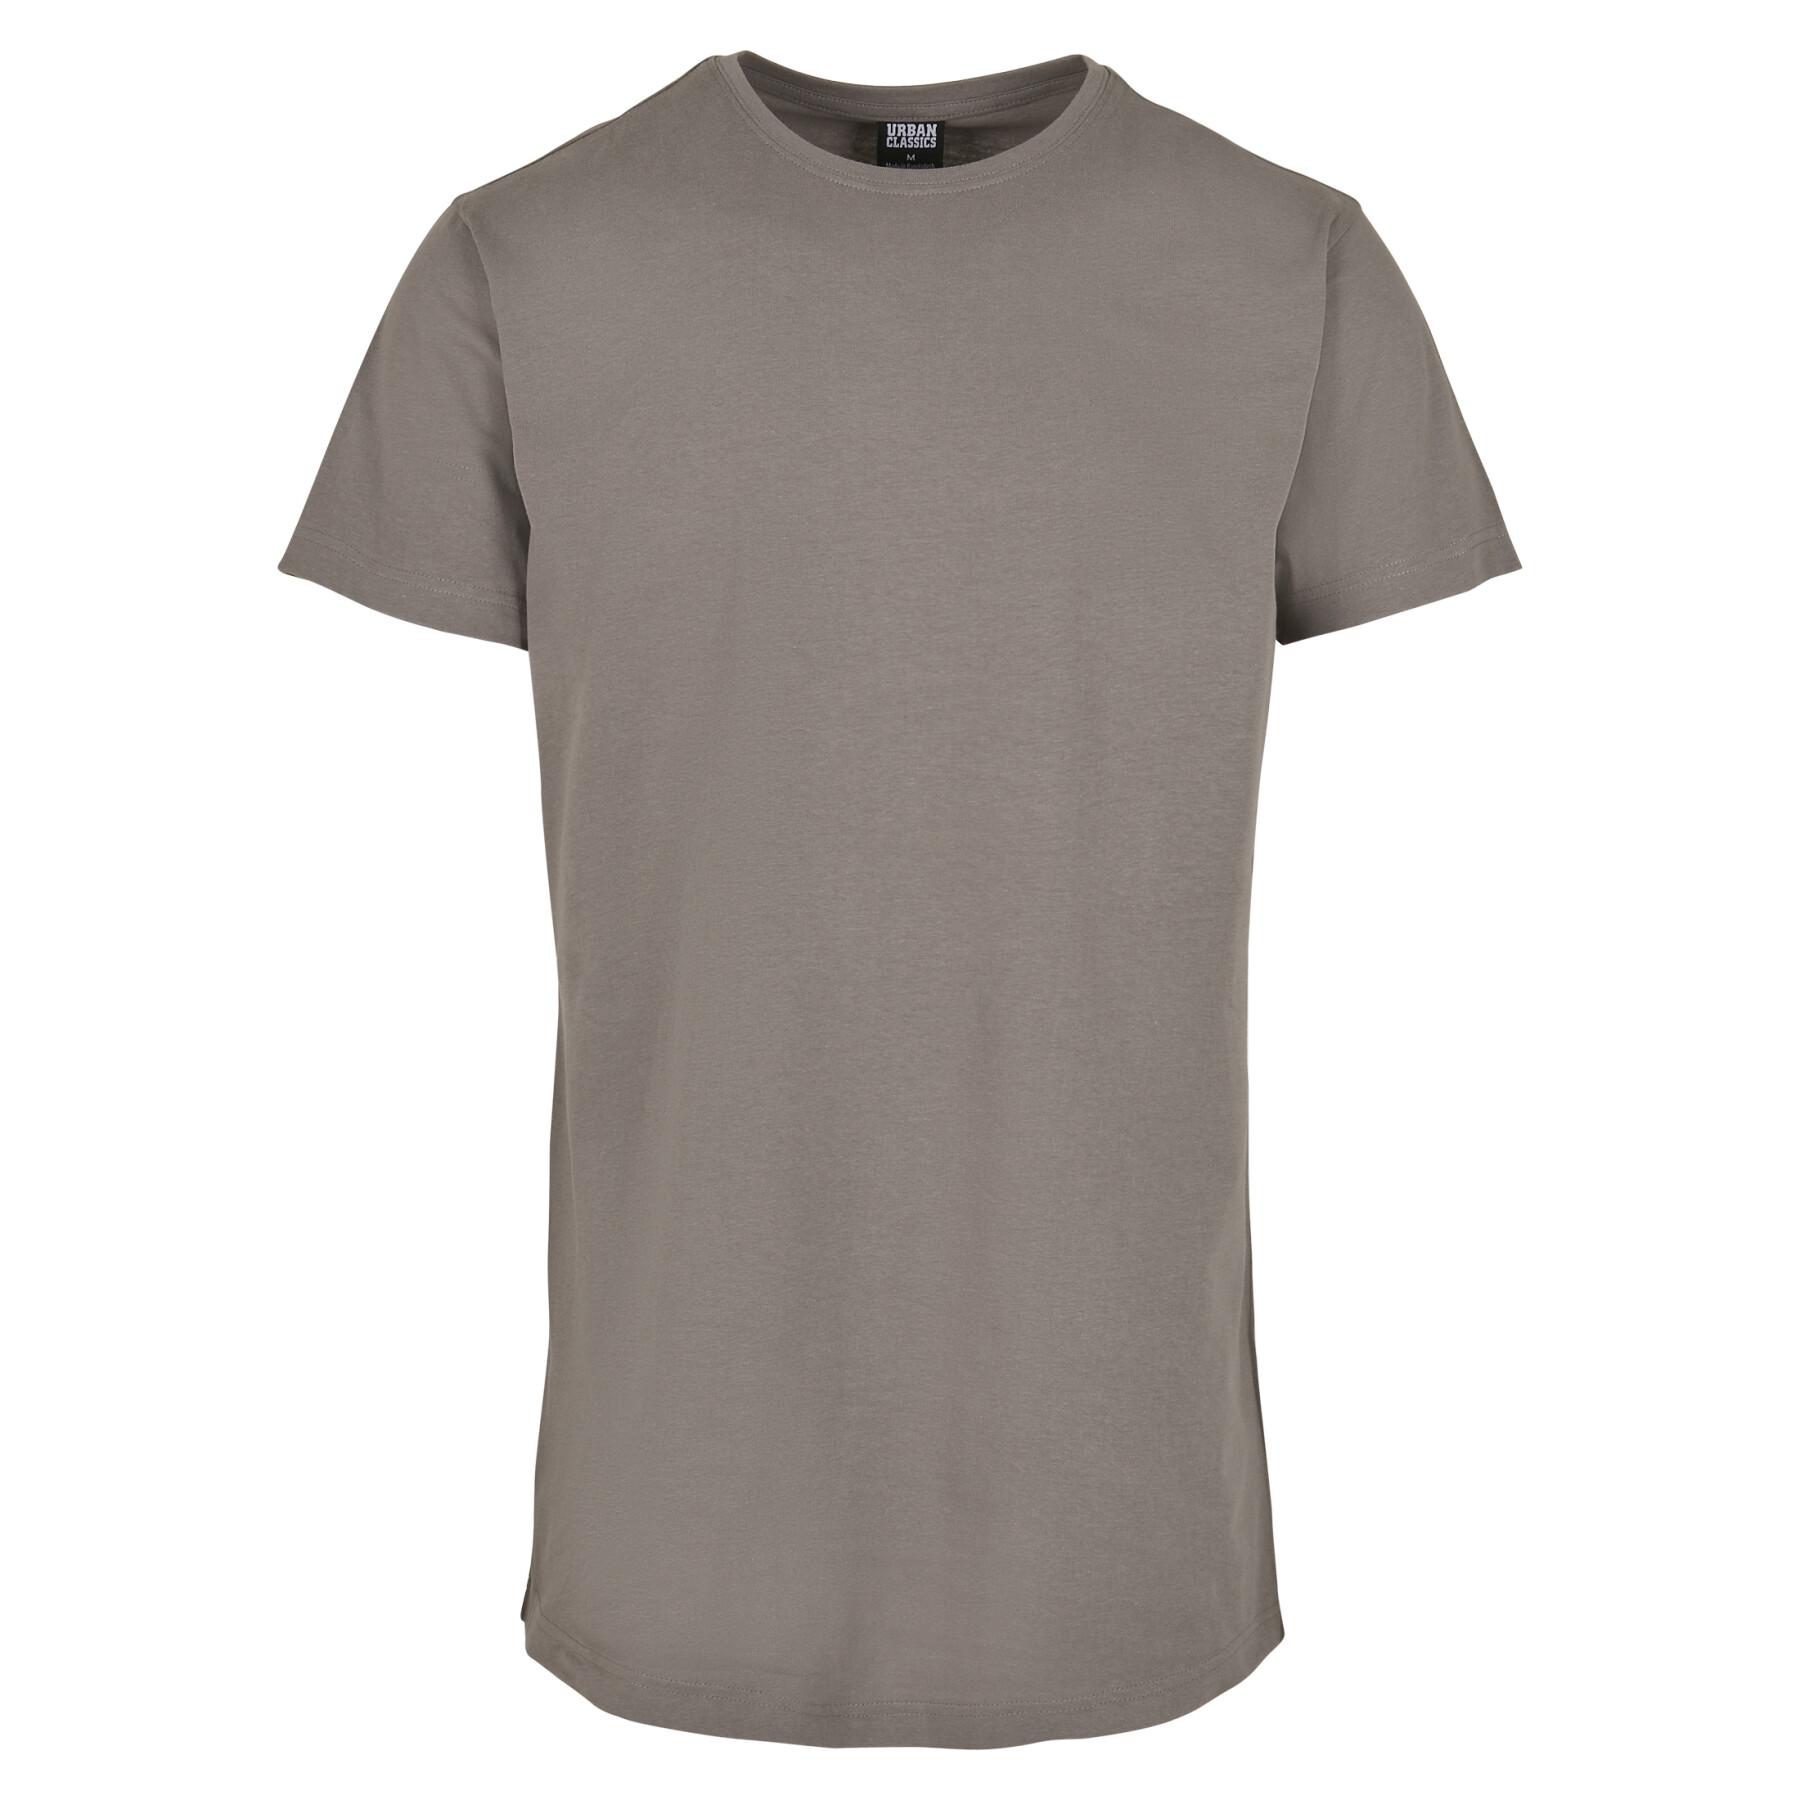 T-shirt Urban Classics shaped long- large sizes